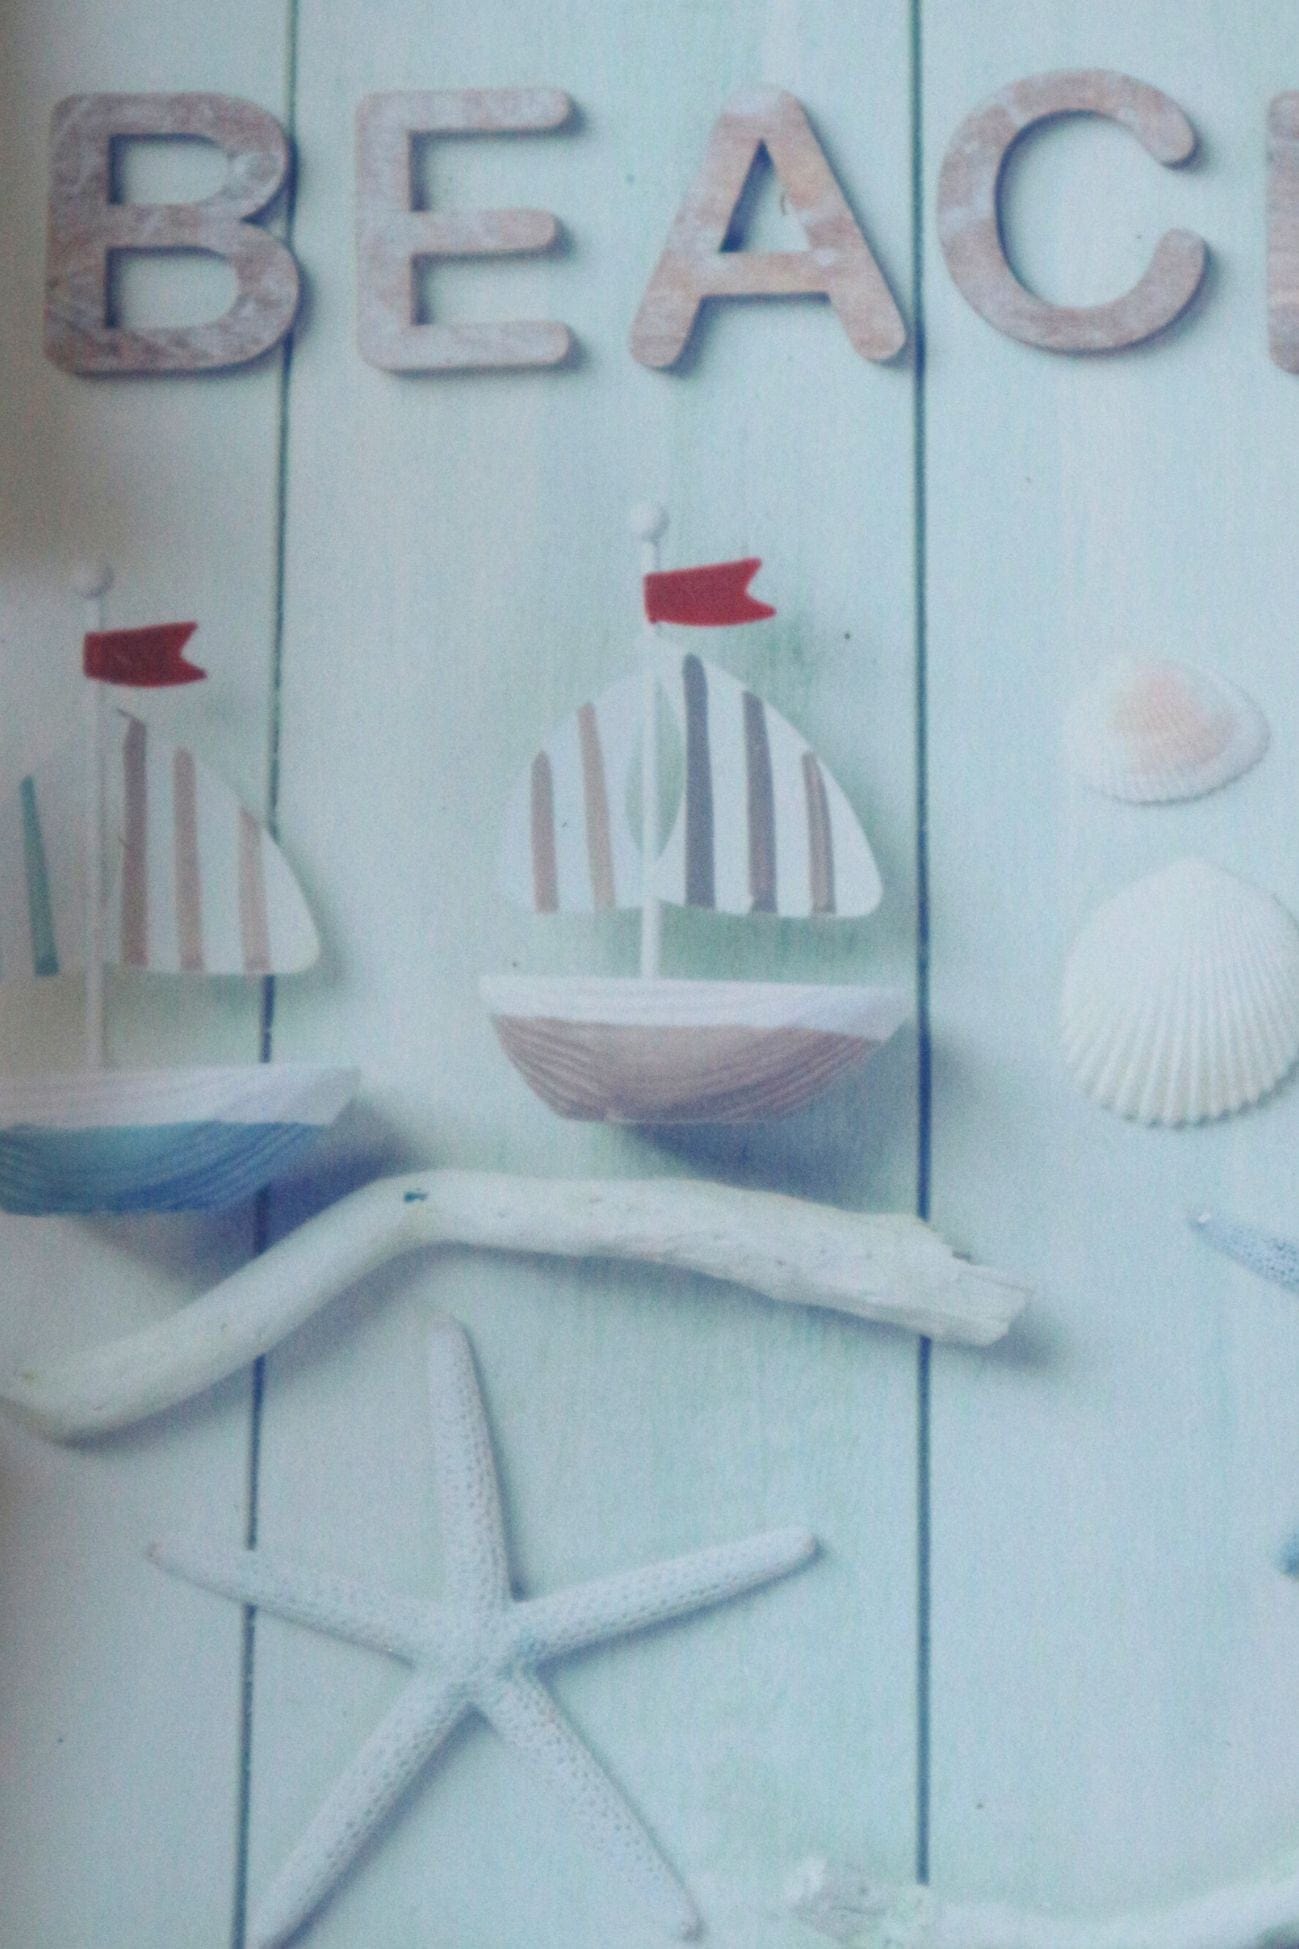 Item International Seaside Beach Seaside Beach - Vassoio piccolo in legno con manici e immagine marina | Item International